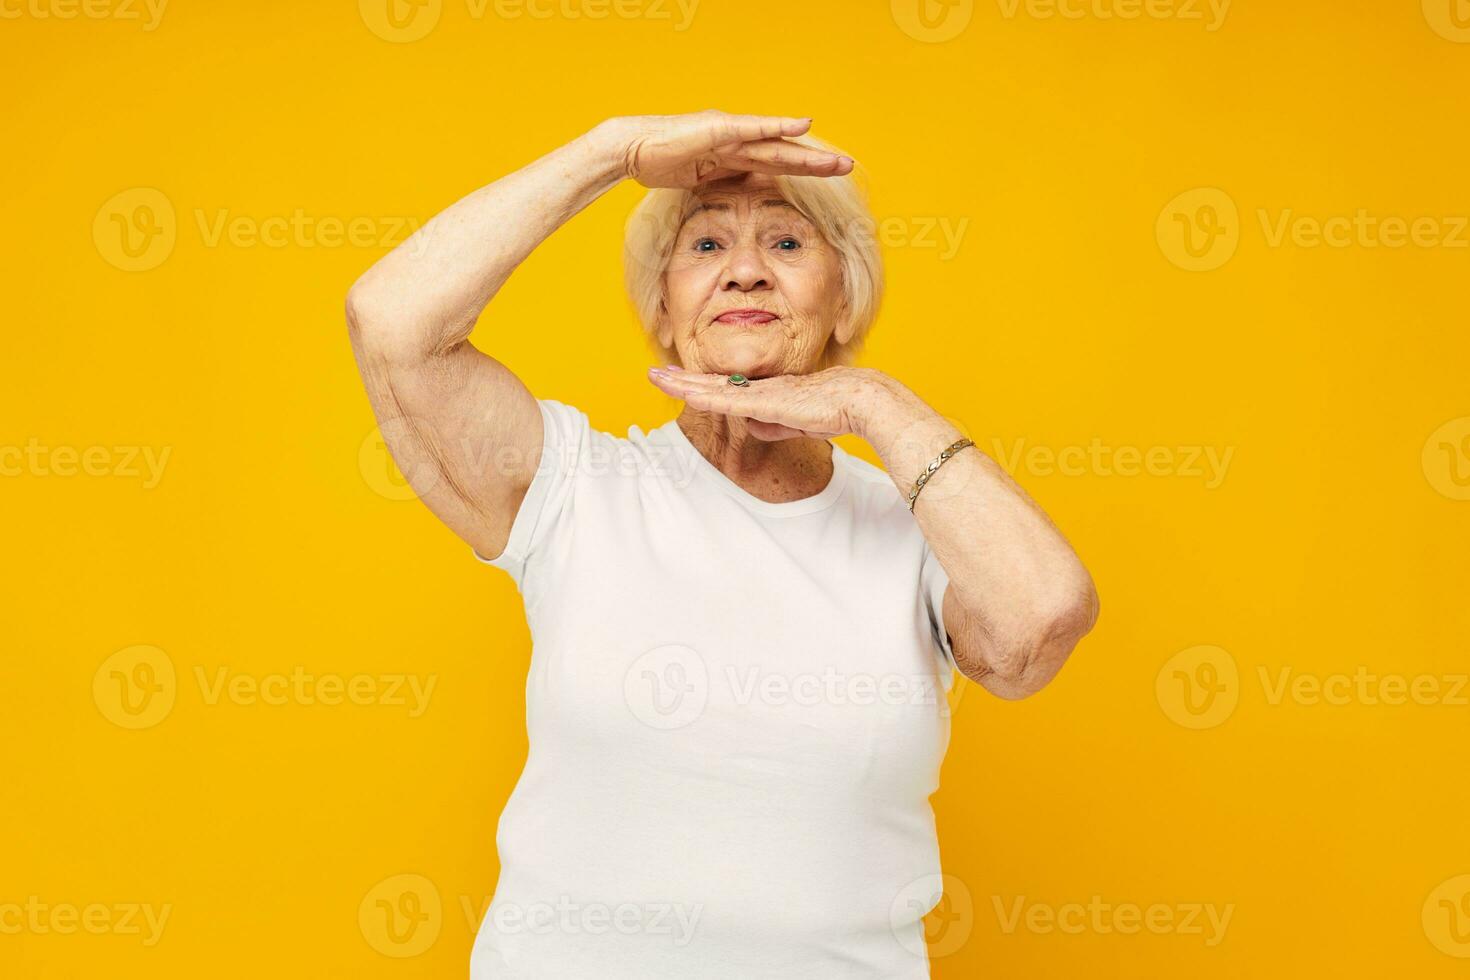 smiling elderly woman happy lifestyle joy yellow background photo